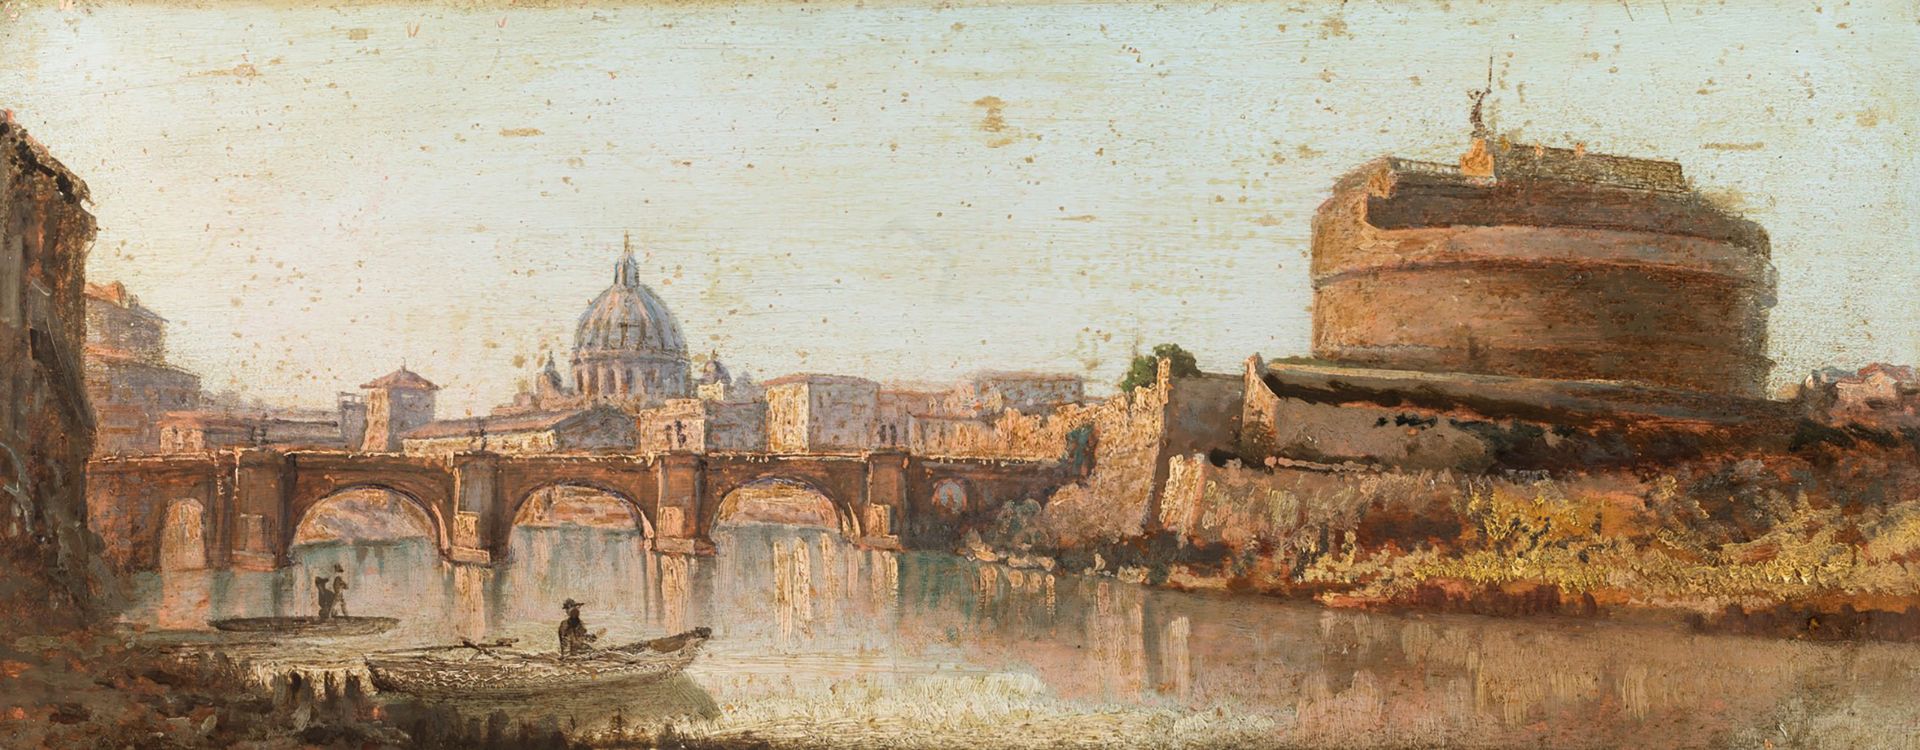 Scuola italiana, inizi secolo XX - Rome, view of the Tiber with Castel Sant'Angelo and San Pietro